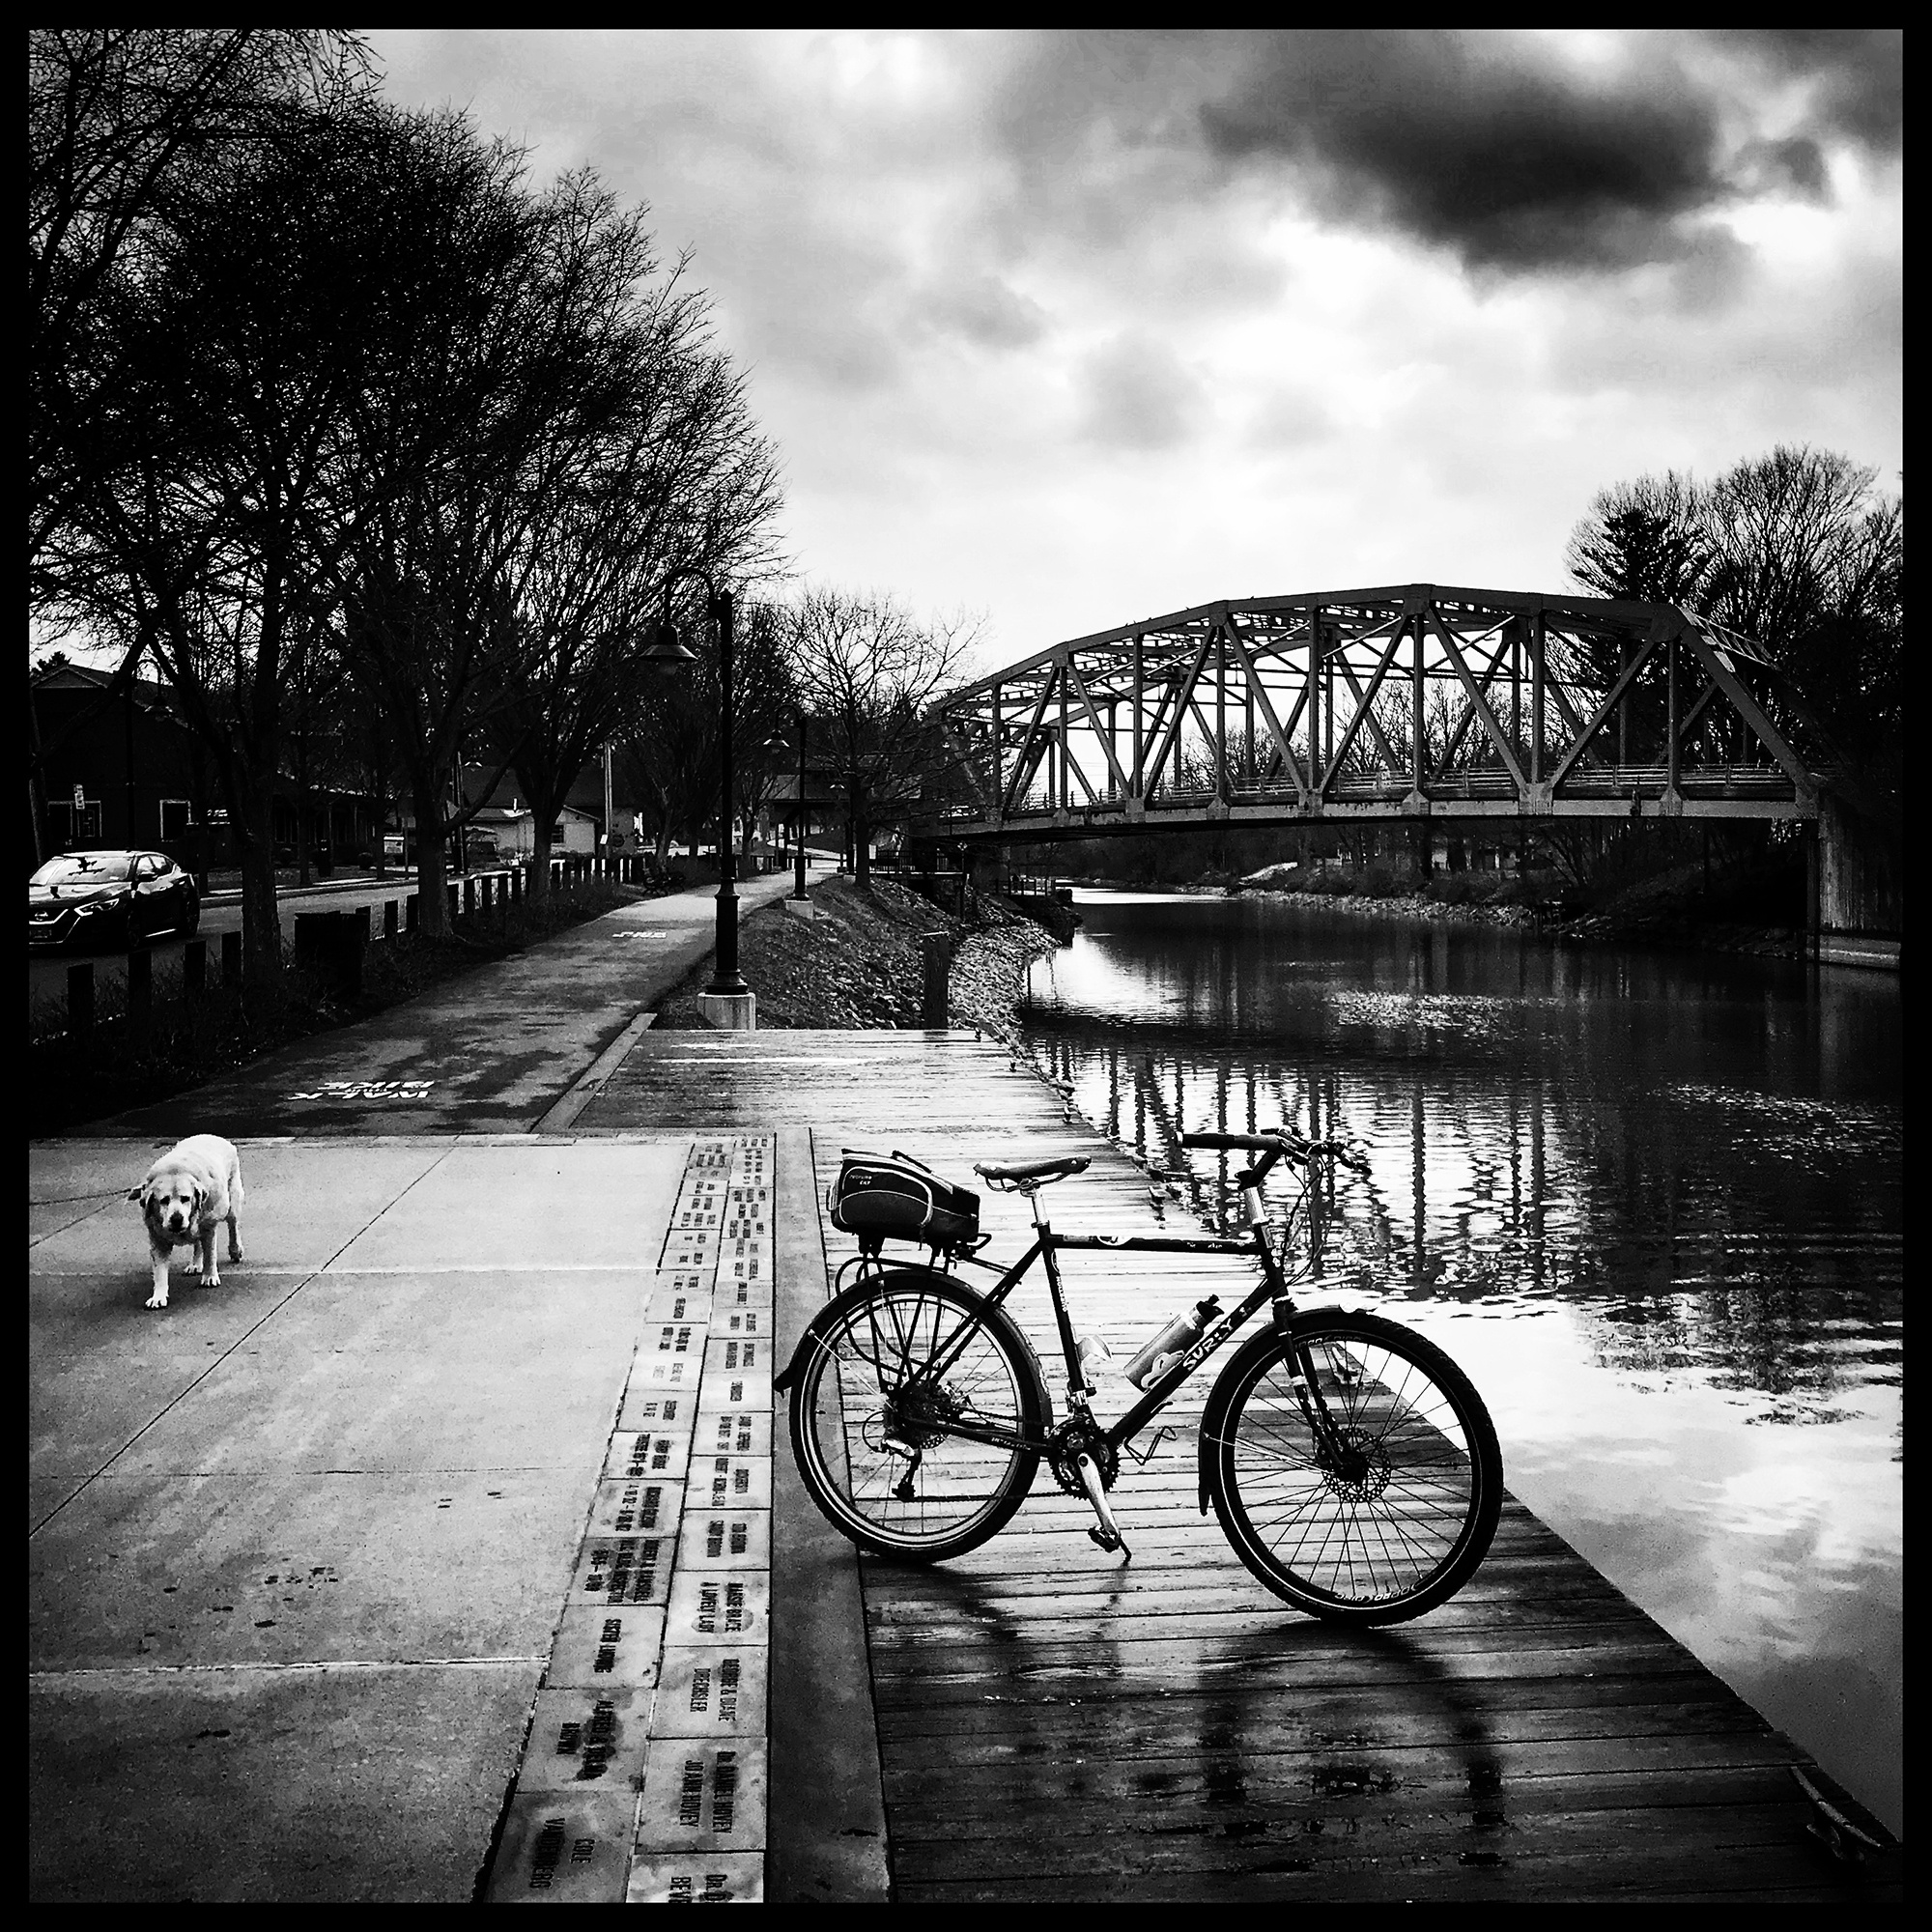 Dog and Bike along the canal bike path.